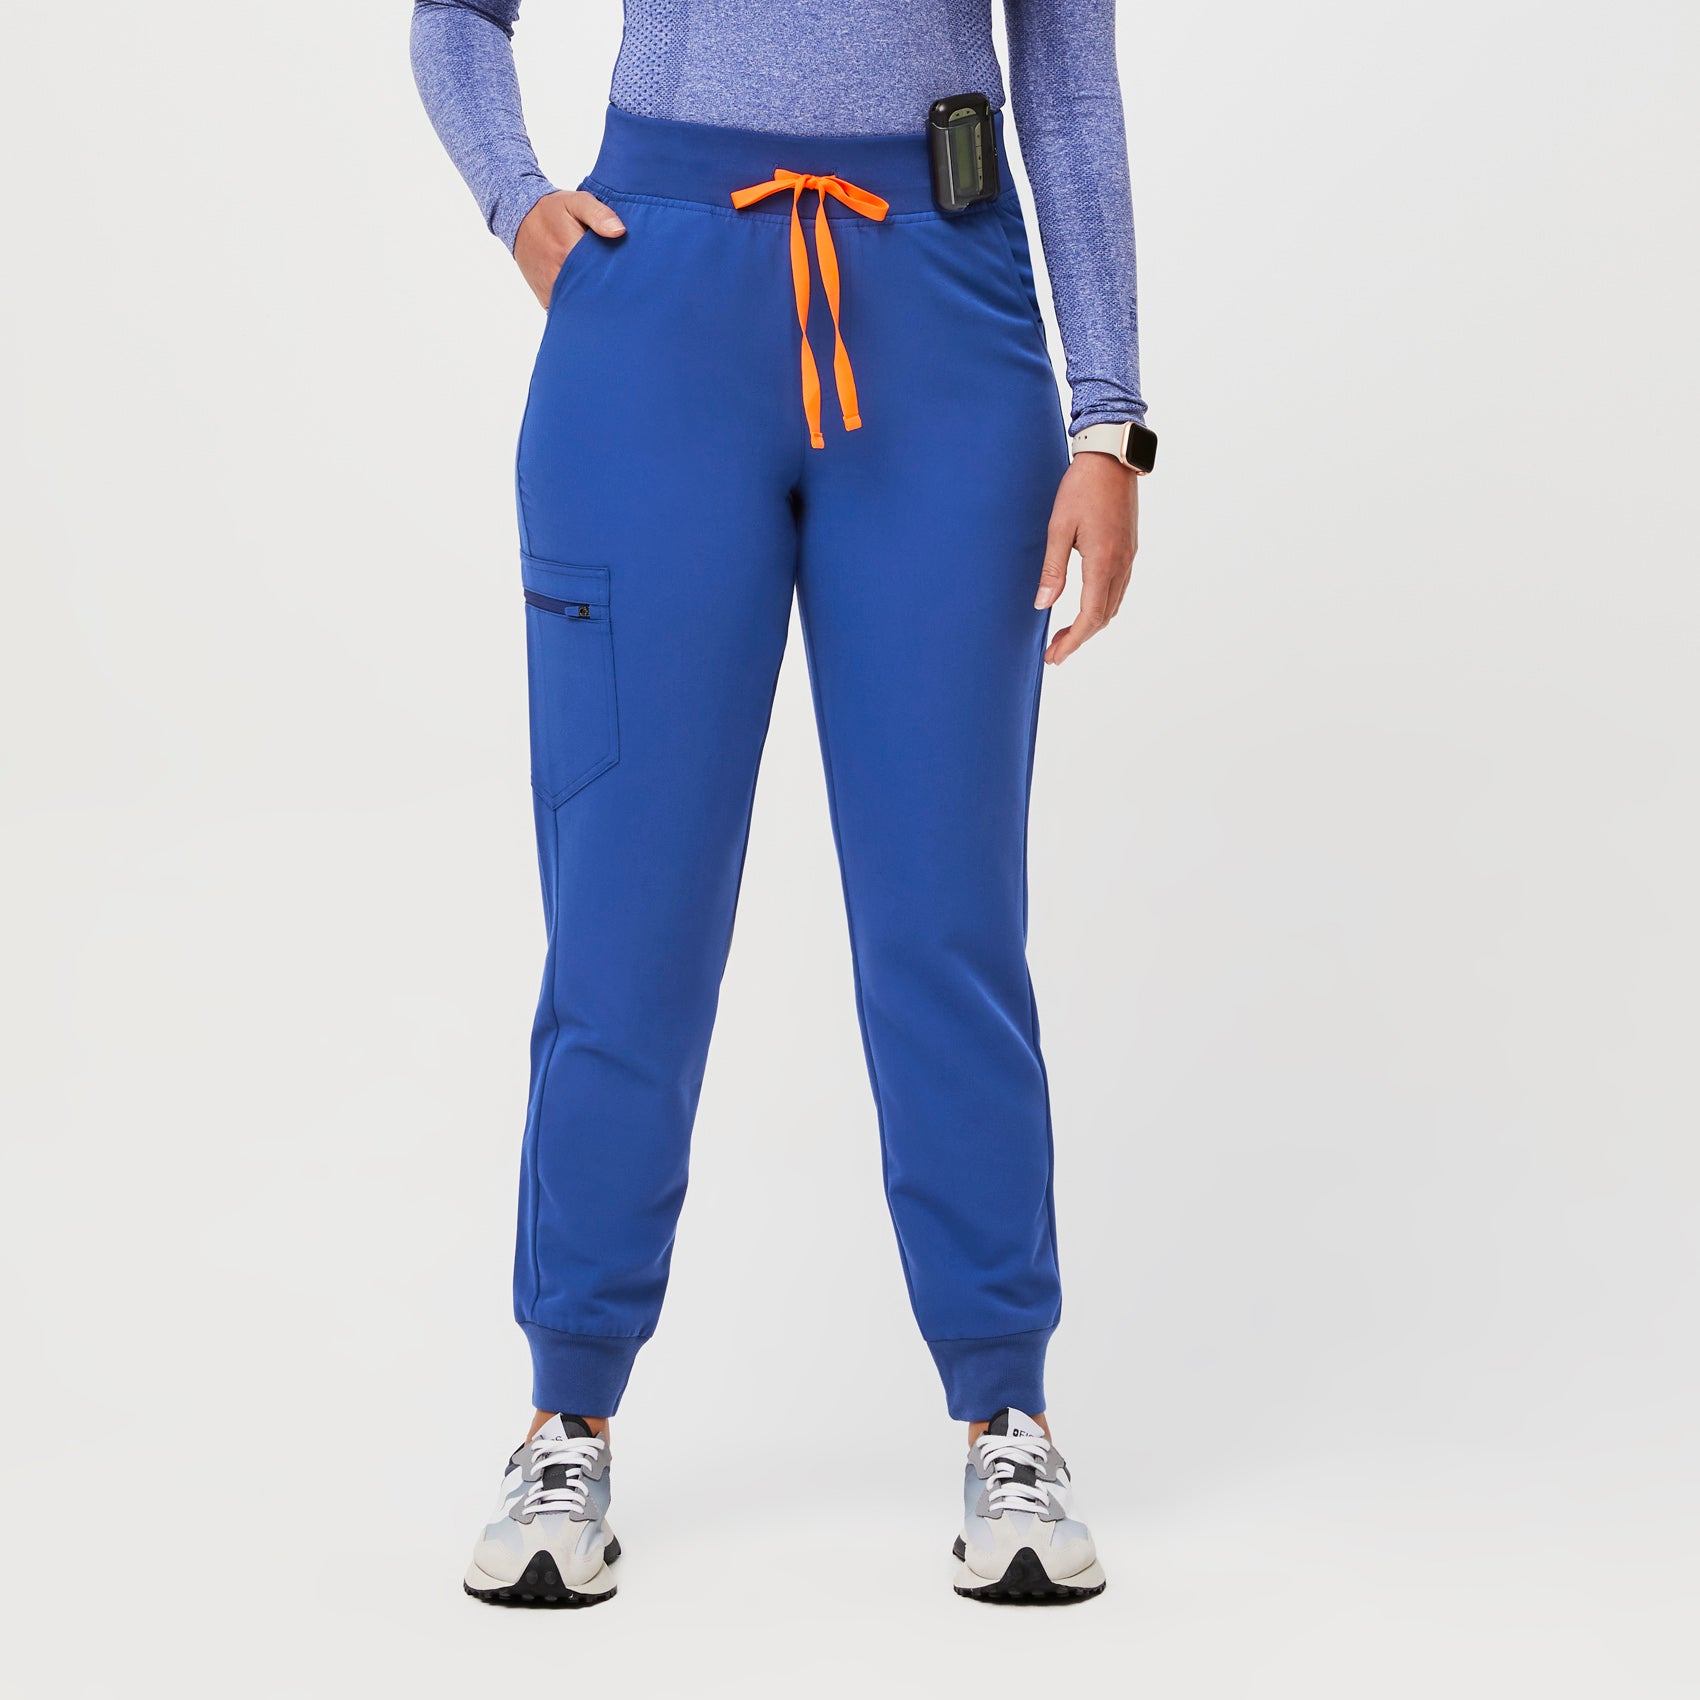 FIGS High waisted Medium - Petite Jogger Scrub Pants Boulder, Women's  Fashion, Activewear on Carousell